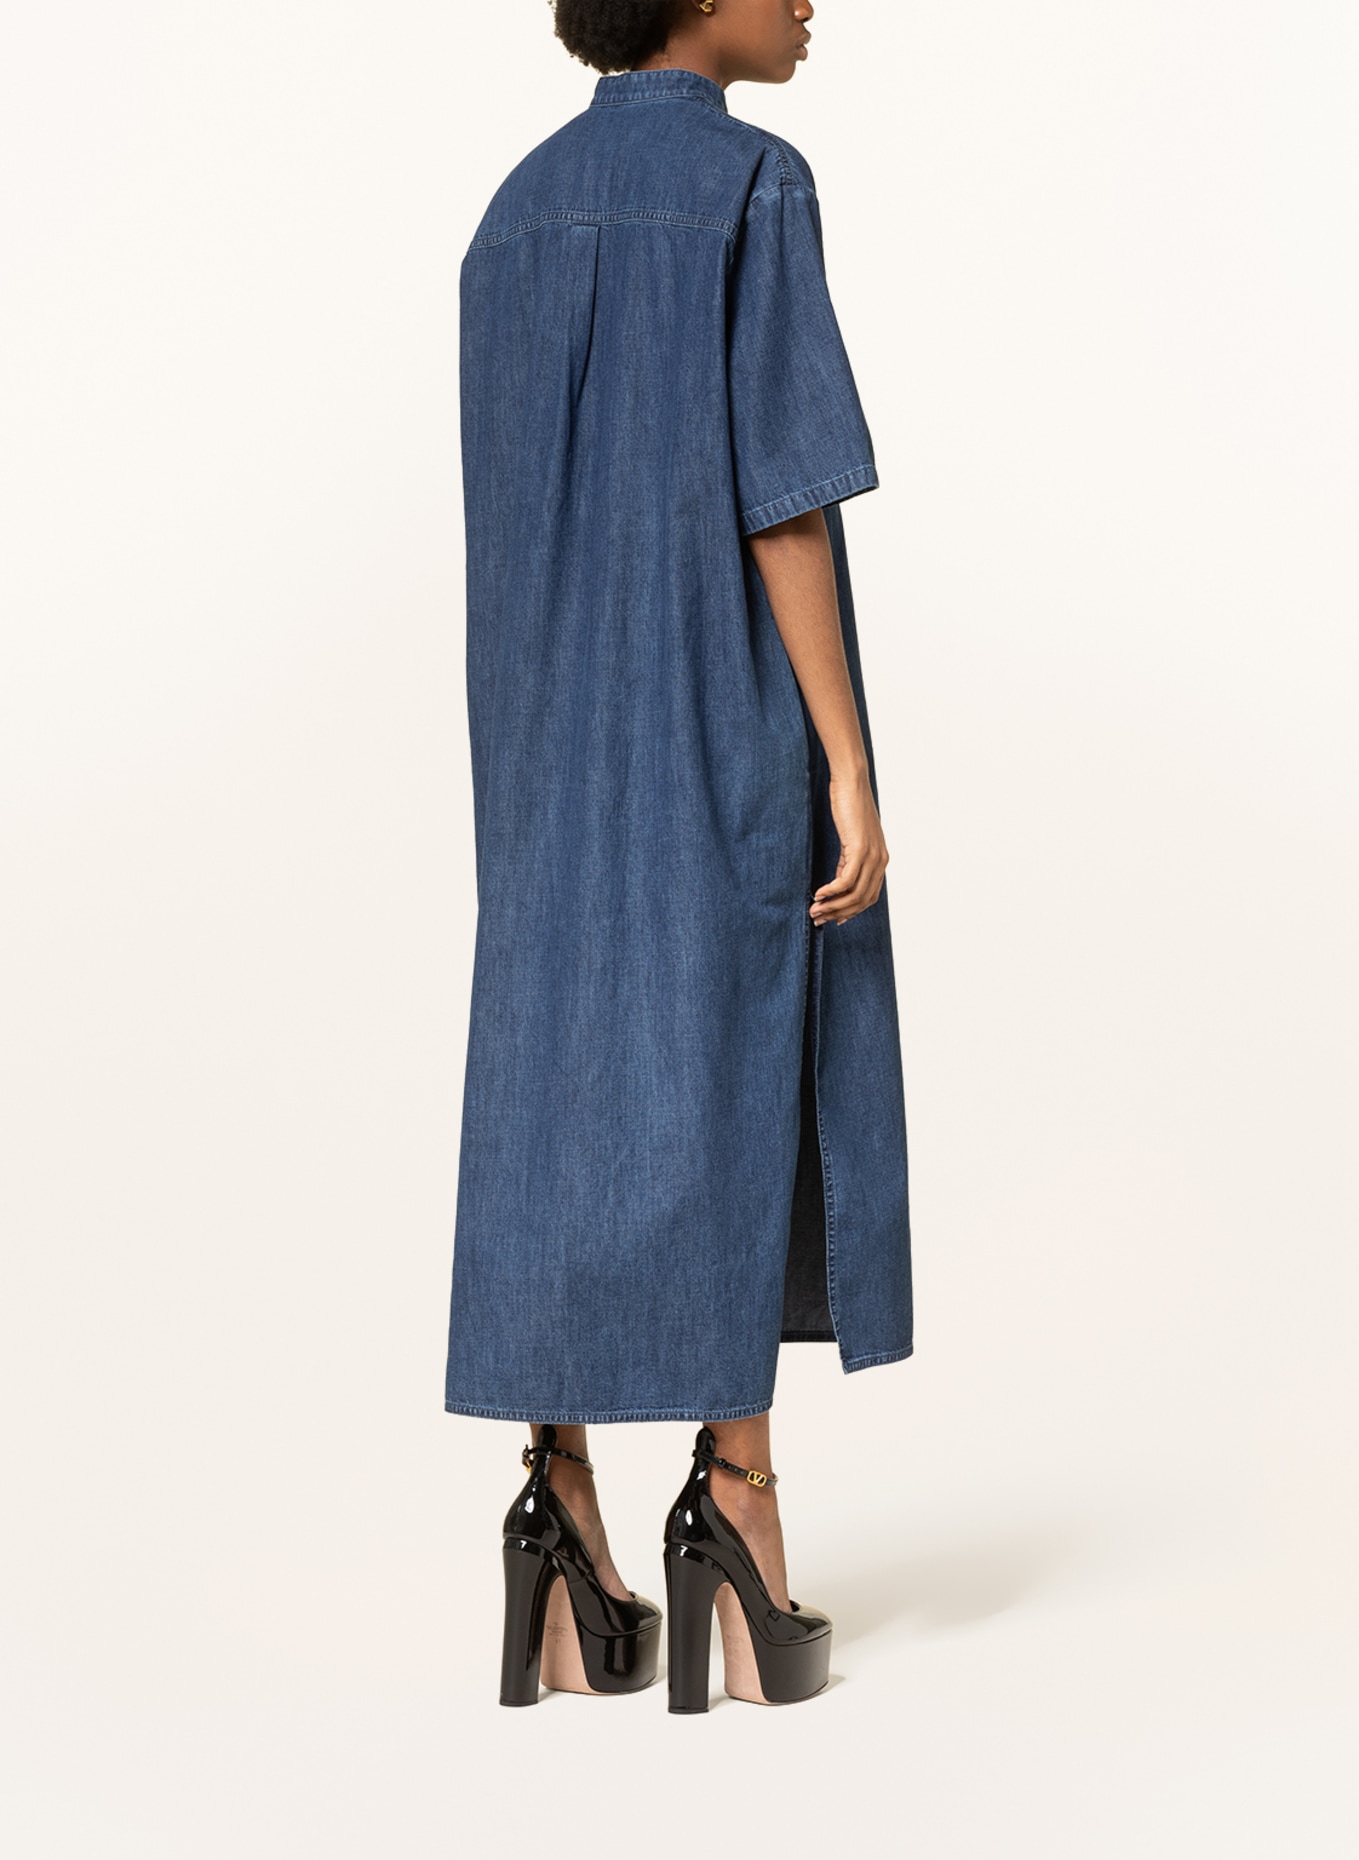 VALENTINO Kleid in Jeansoptik, Farbe: 558 MEDIUM BLUE DENIM (Bild 3)